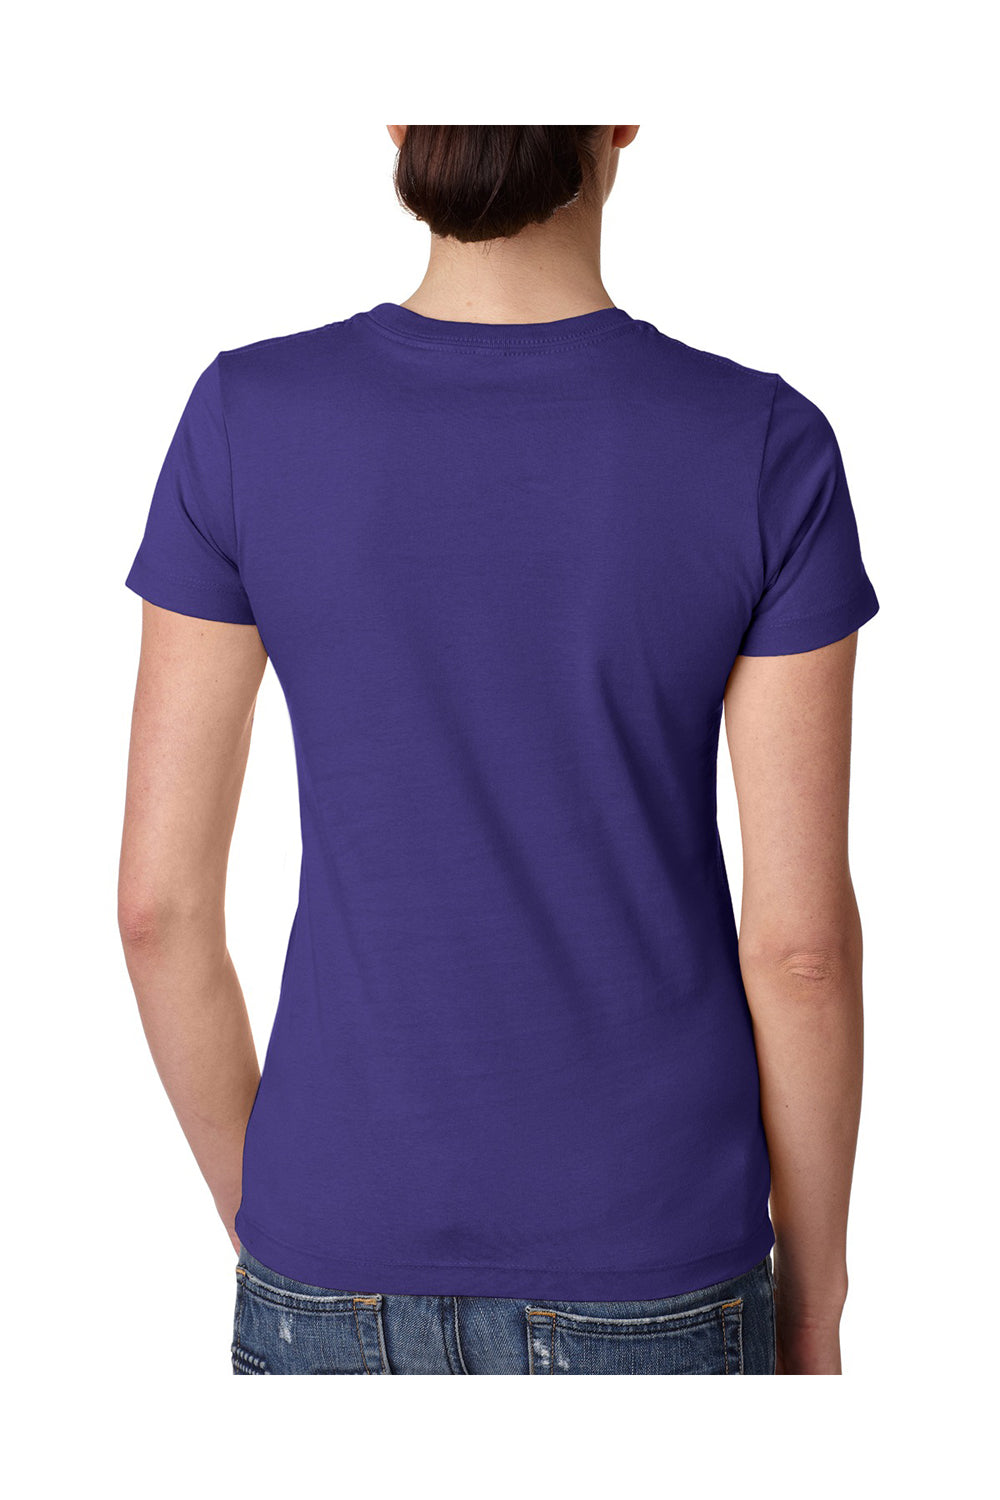 Next Level N3900 Womens Boyfriend Fine Jersey Short Sleeve Crewneck T-Shirt Purple Rush Back